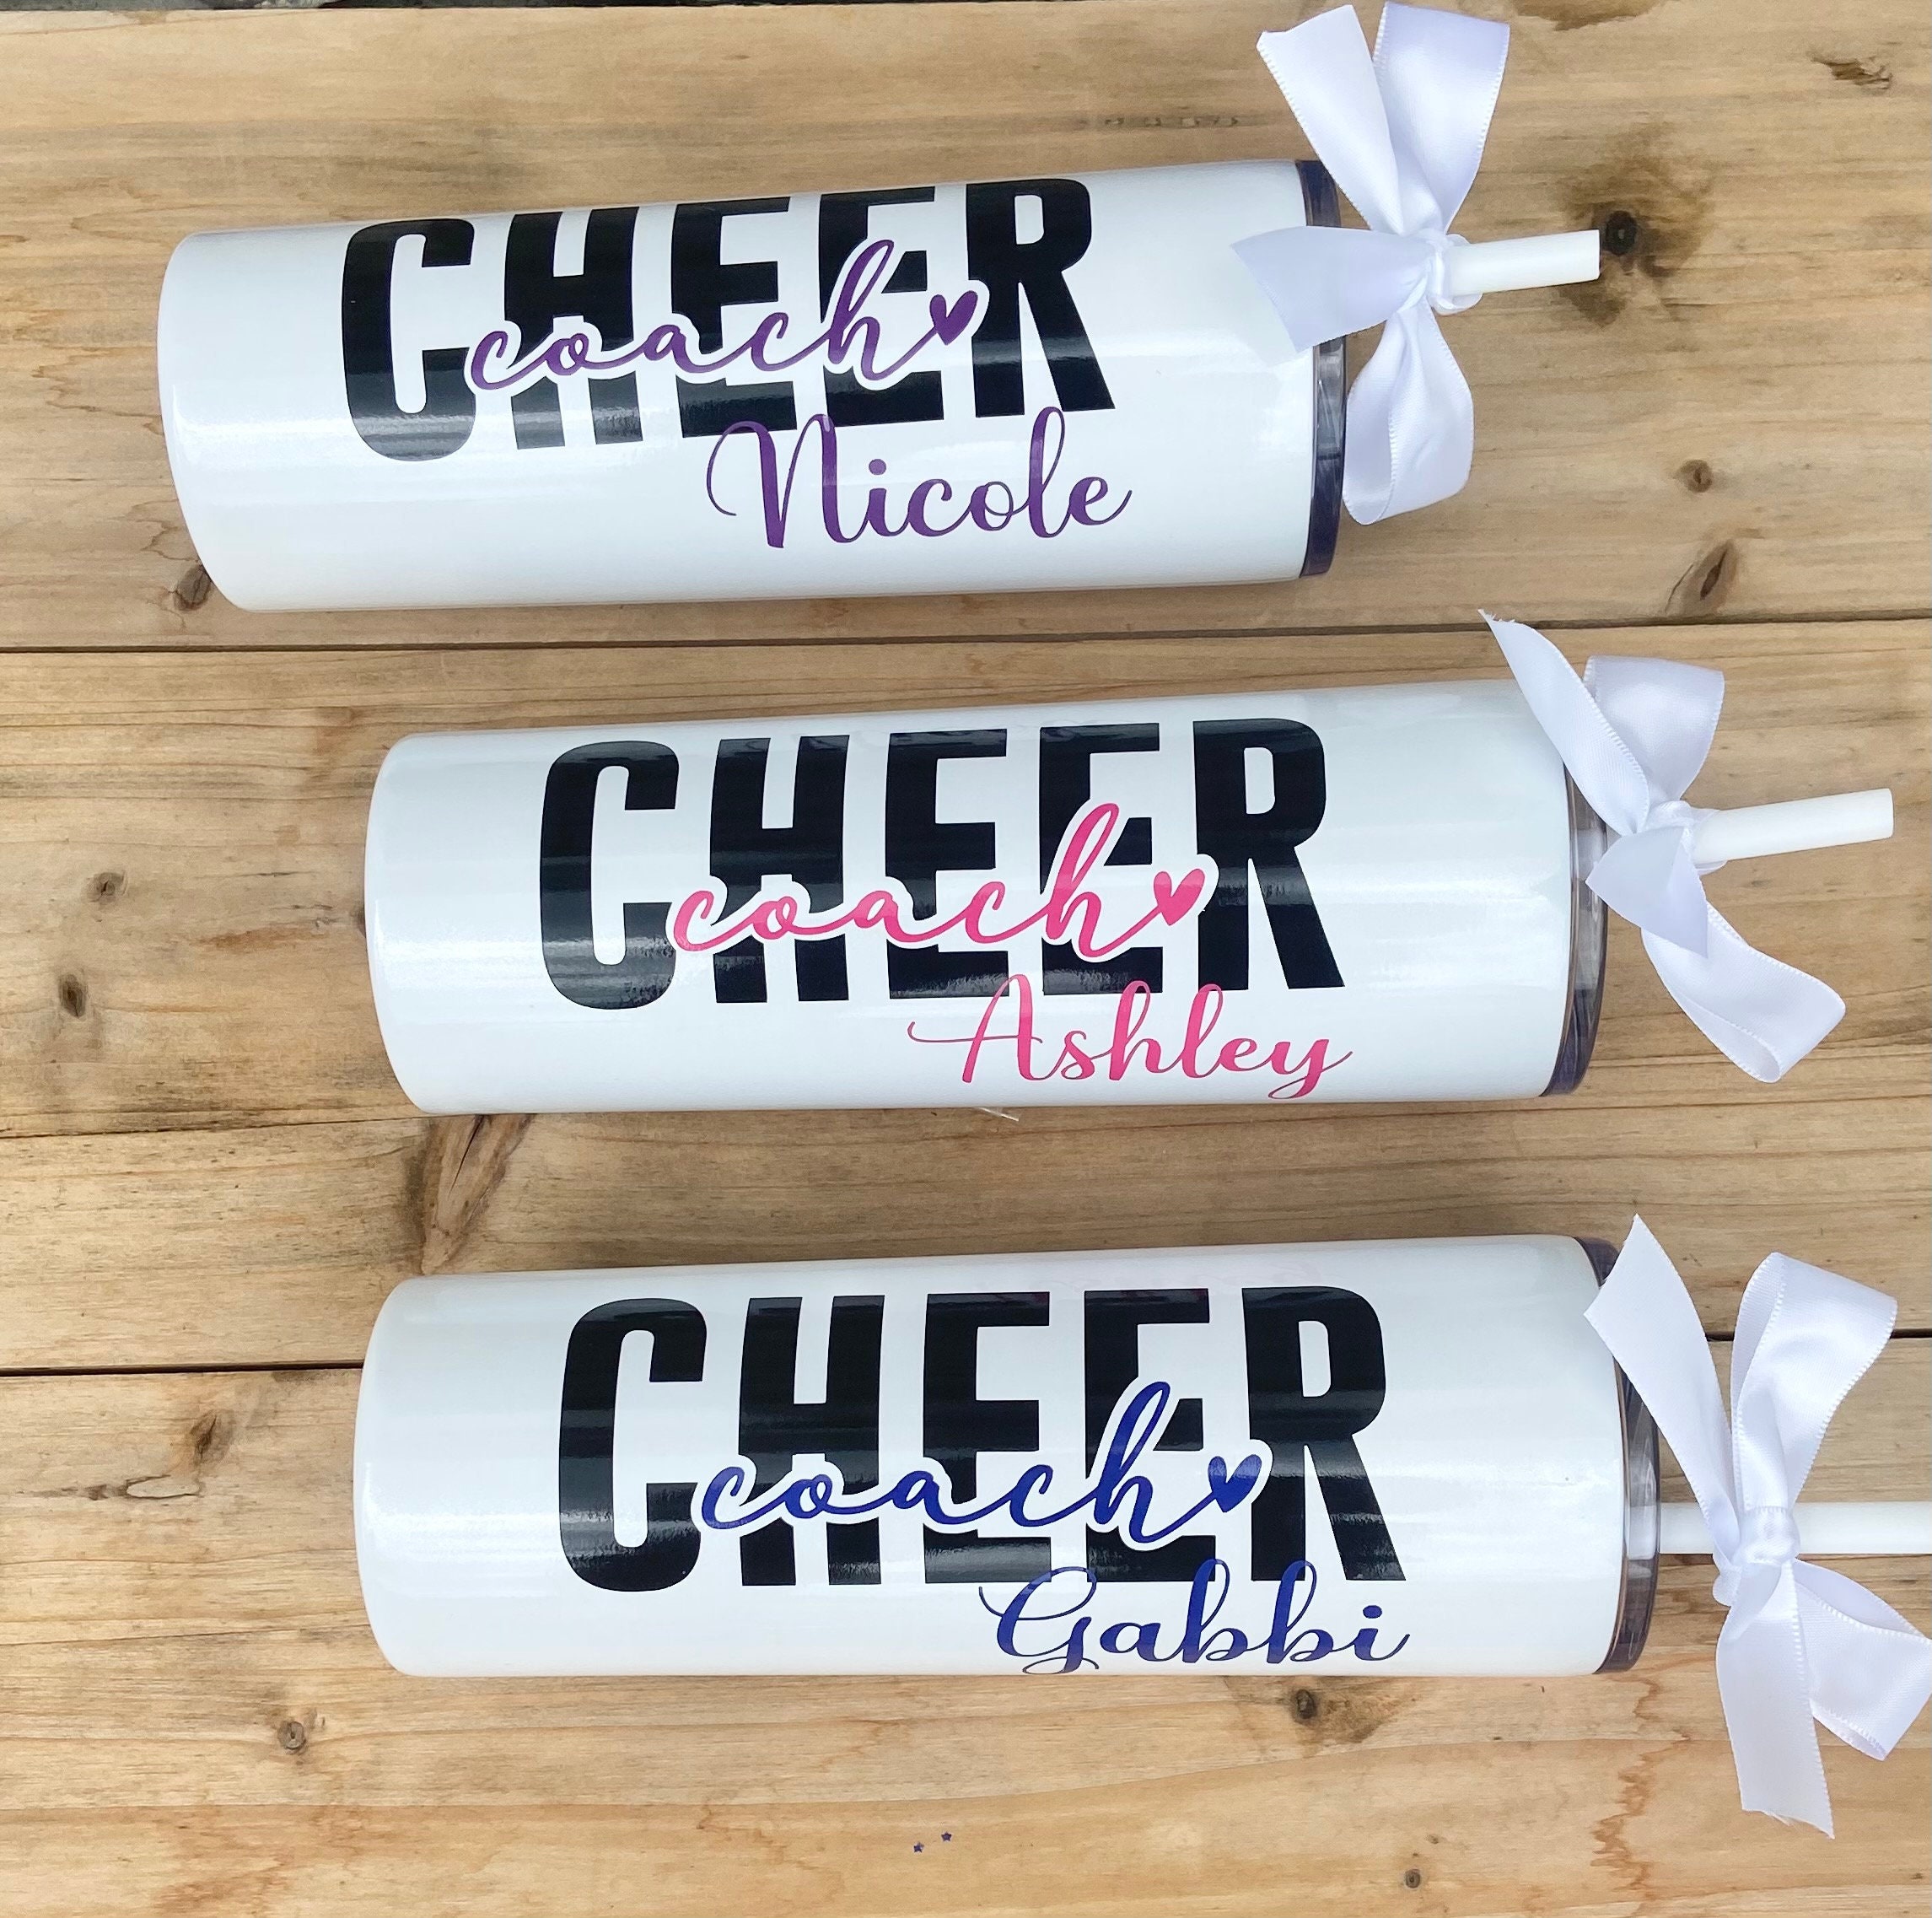 Cheer Tumbler Set 4 Pcs Cheerleader Tumbler Gifts Cheer Coach Gifts 20 oz  Cheer Stainless Steel Doub…See more Cheer Tumbler Set 4 Pcs Cheerleader